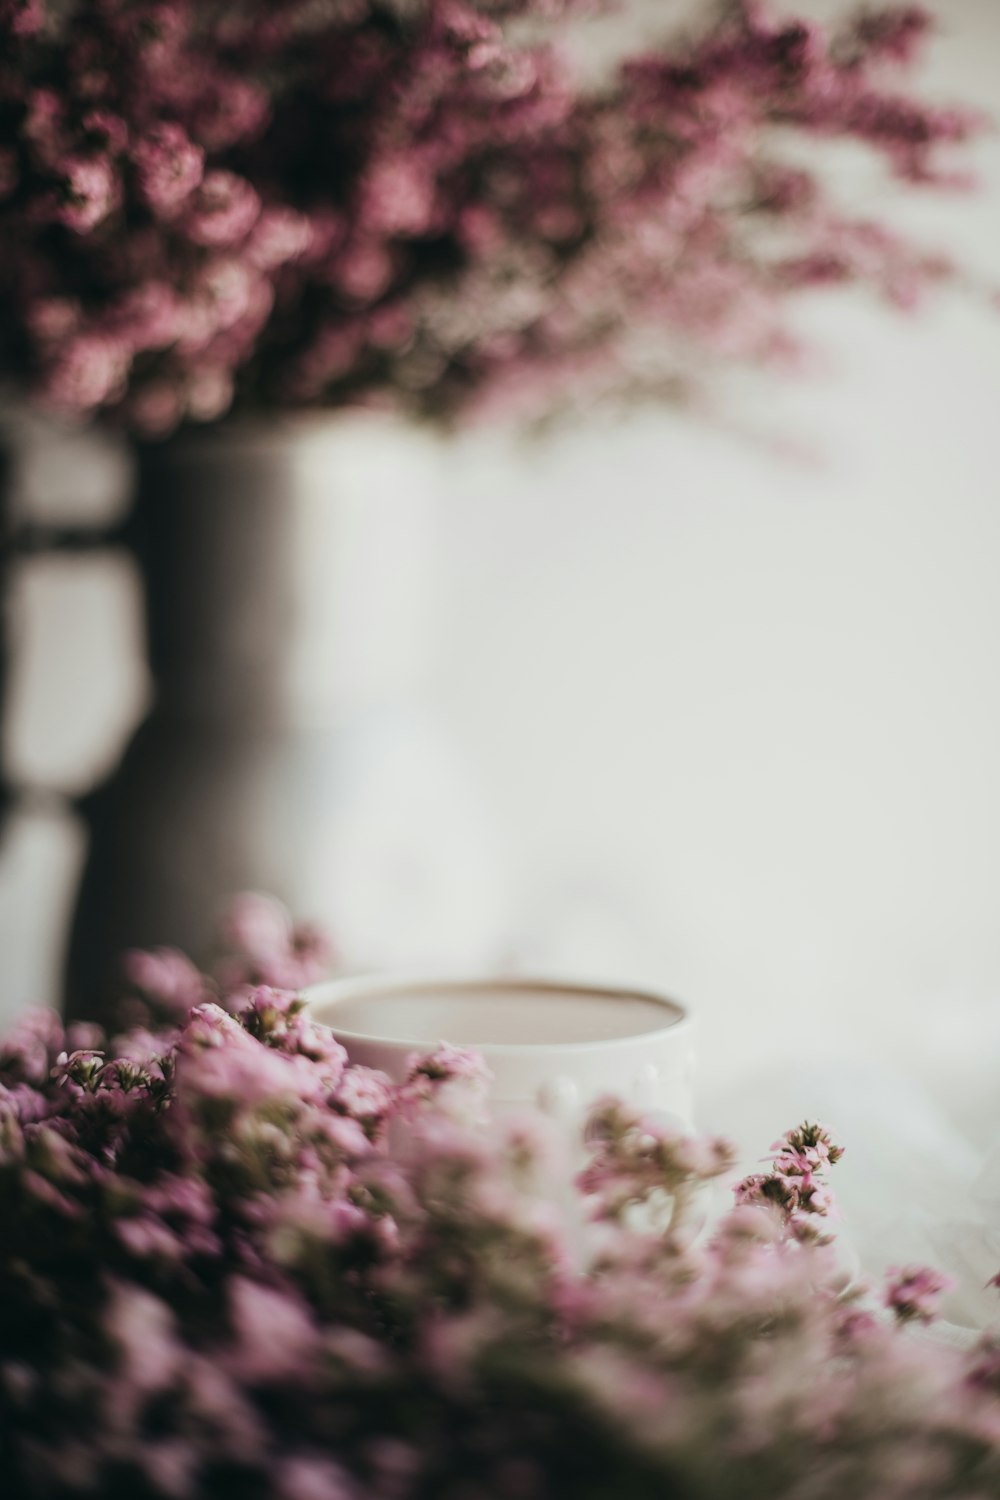 purple flowers beside white ceramic mug